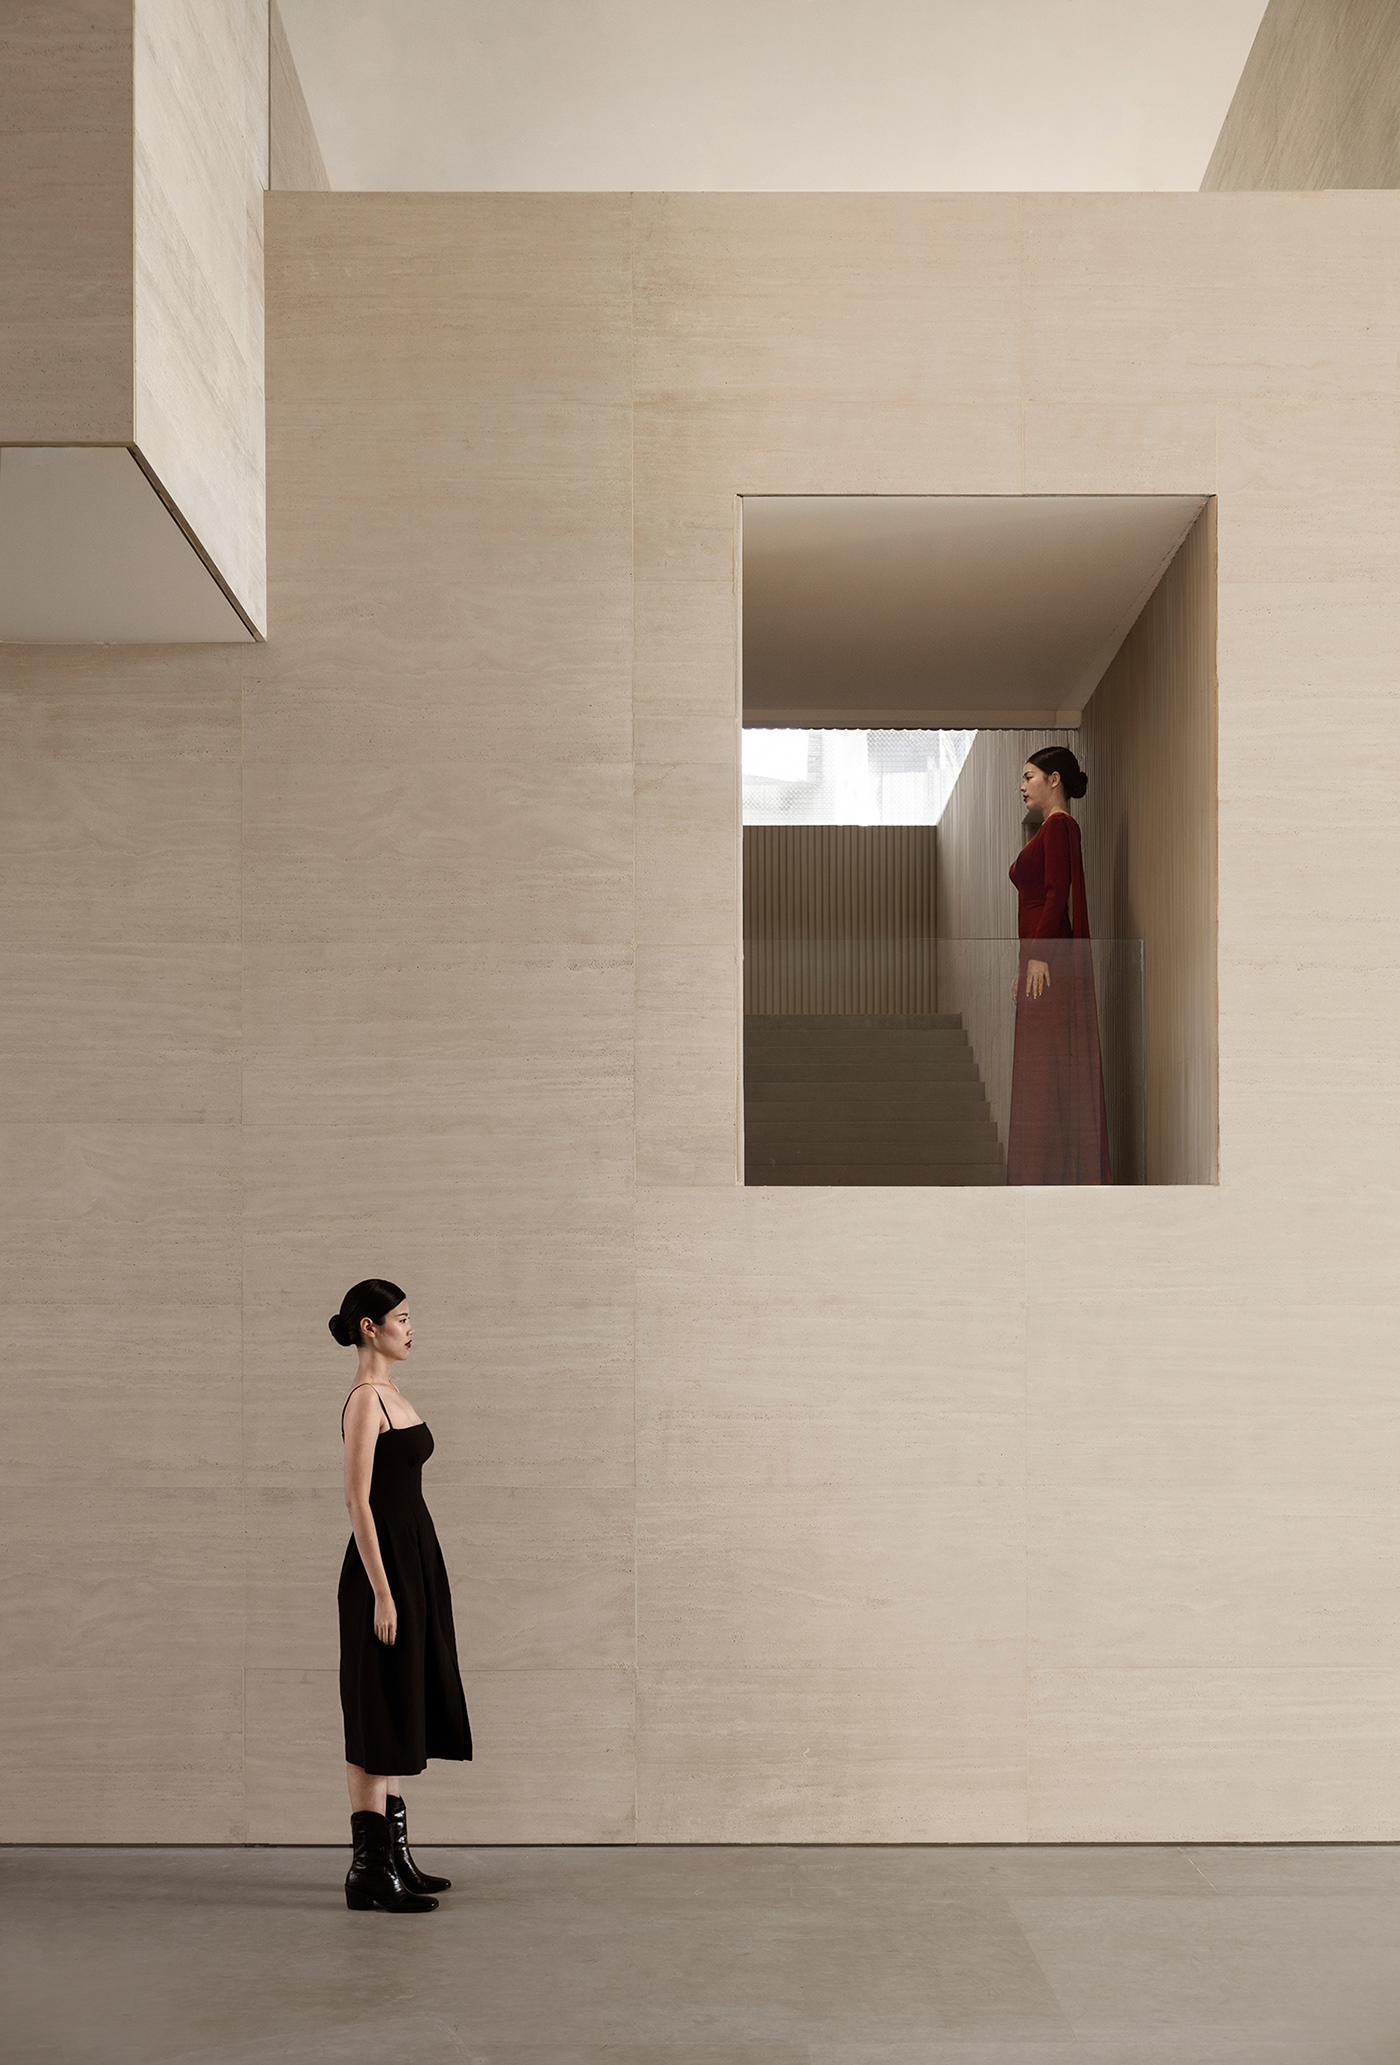 architecture art center i2dinspiration inspiration interiordesign minimalist museum reception Wuhan